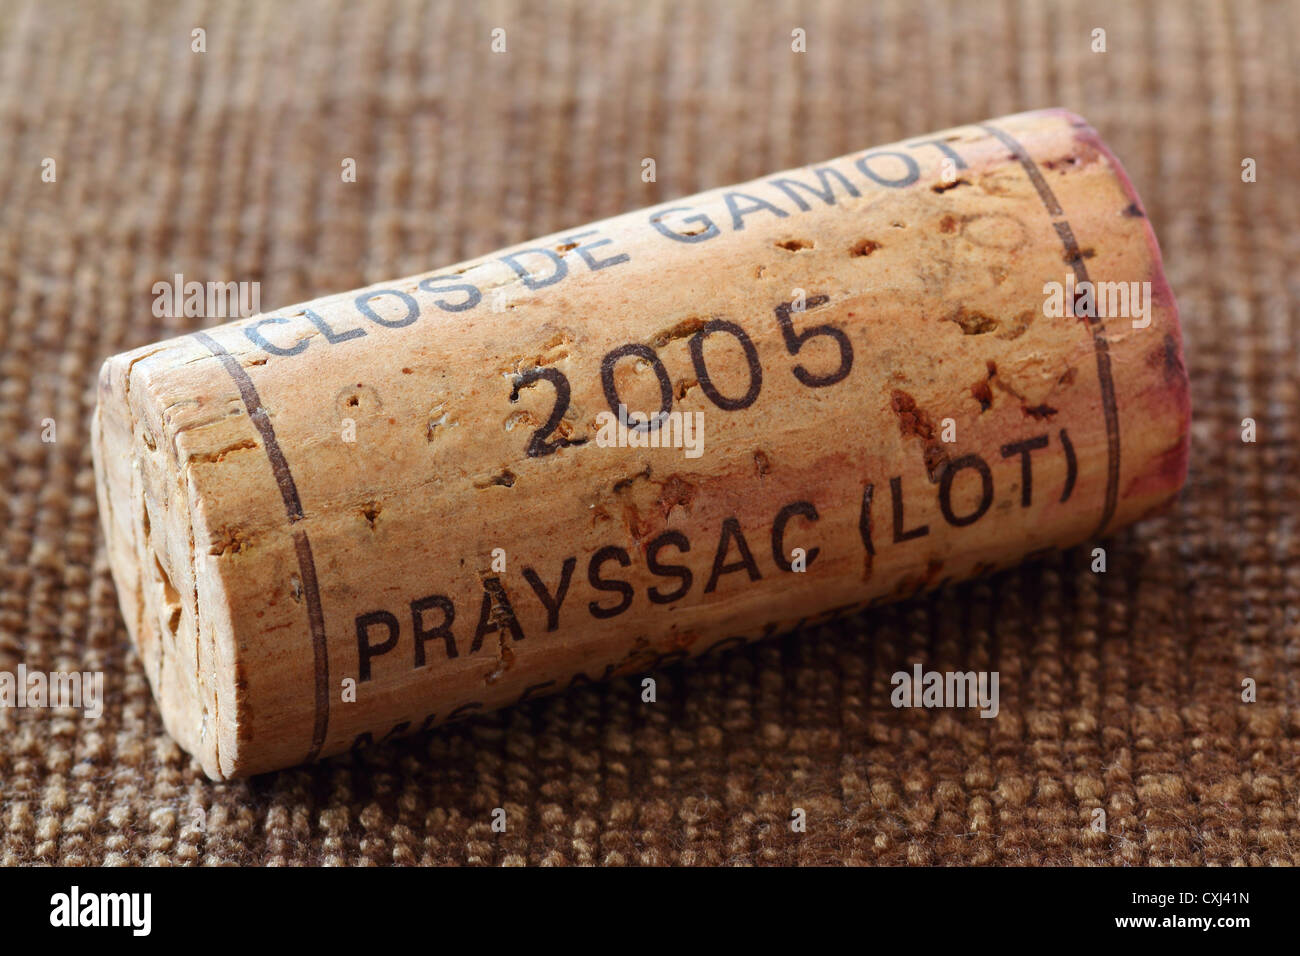 Cahors Clos de Gamot Prayssac Lot 2005 wine cork stopper Stock Photo